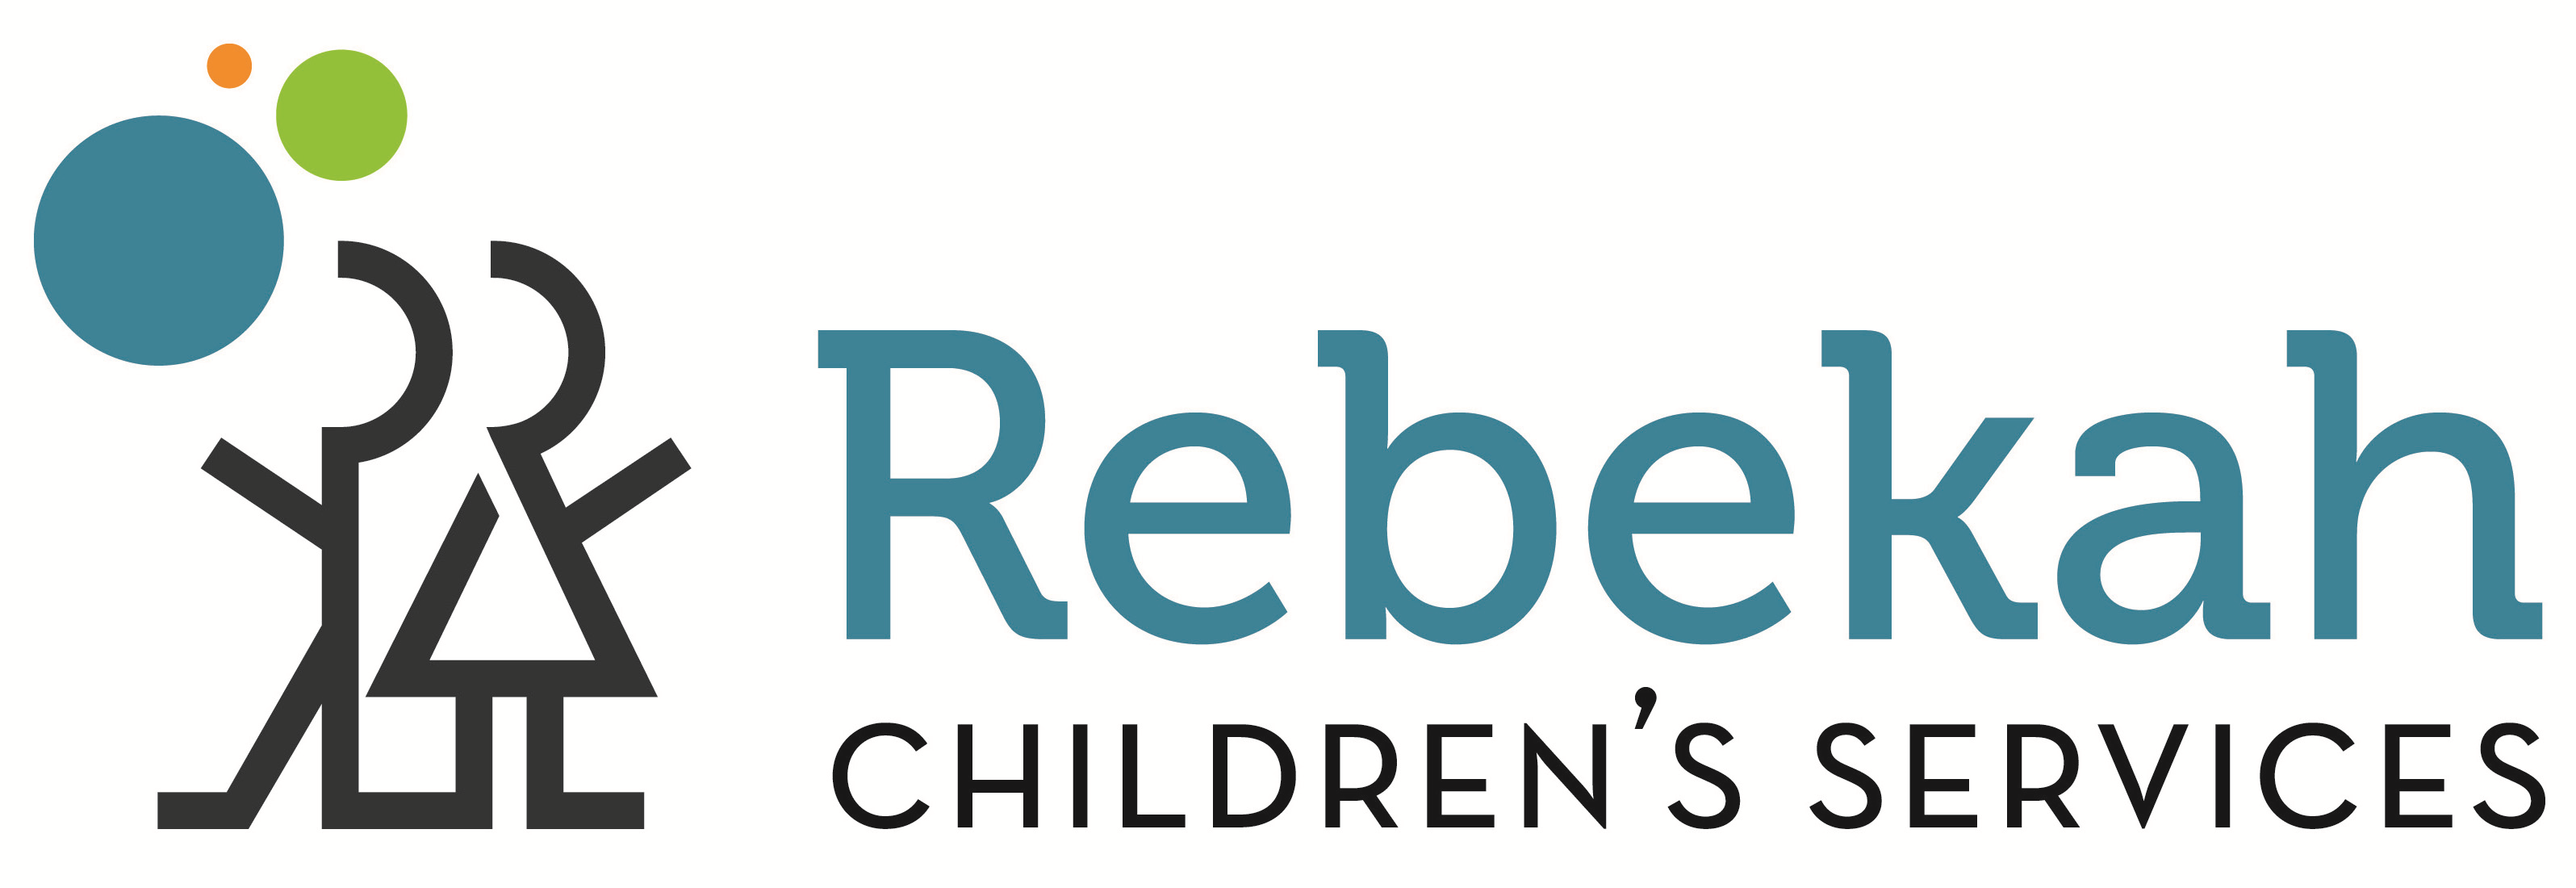 Rebekah Children's Services logo